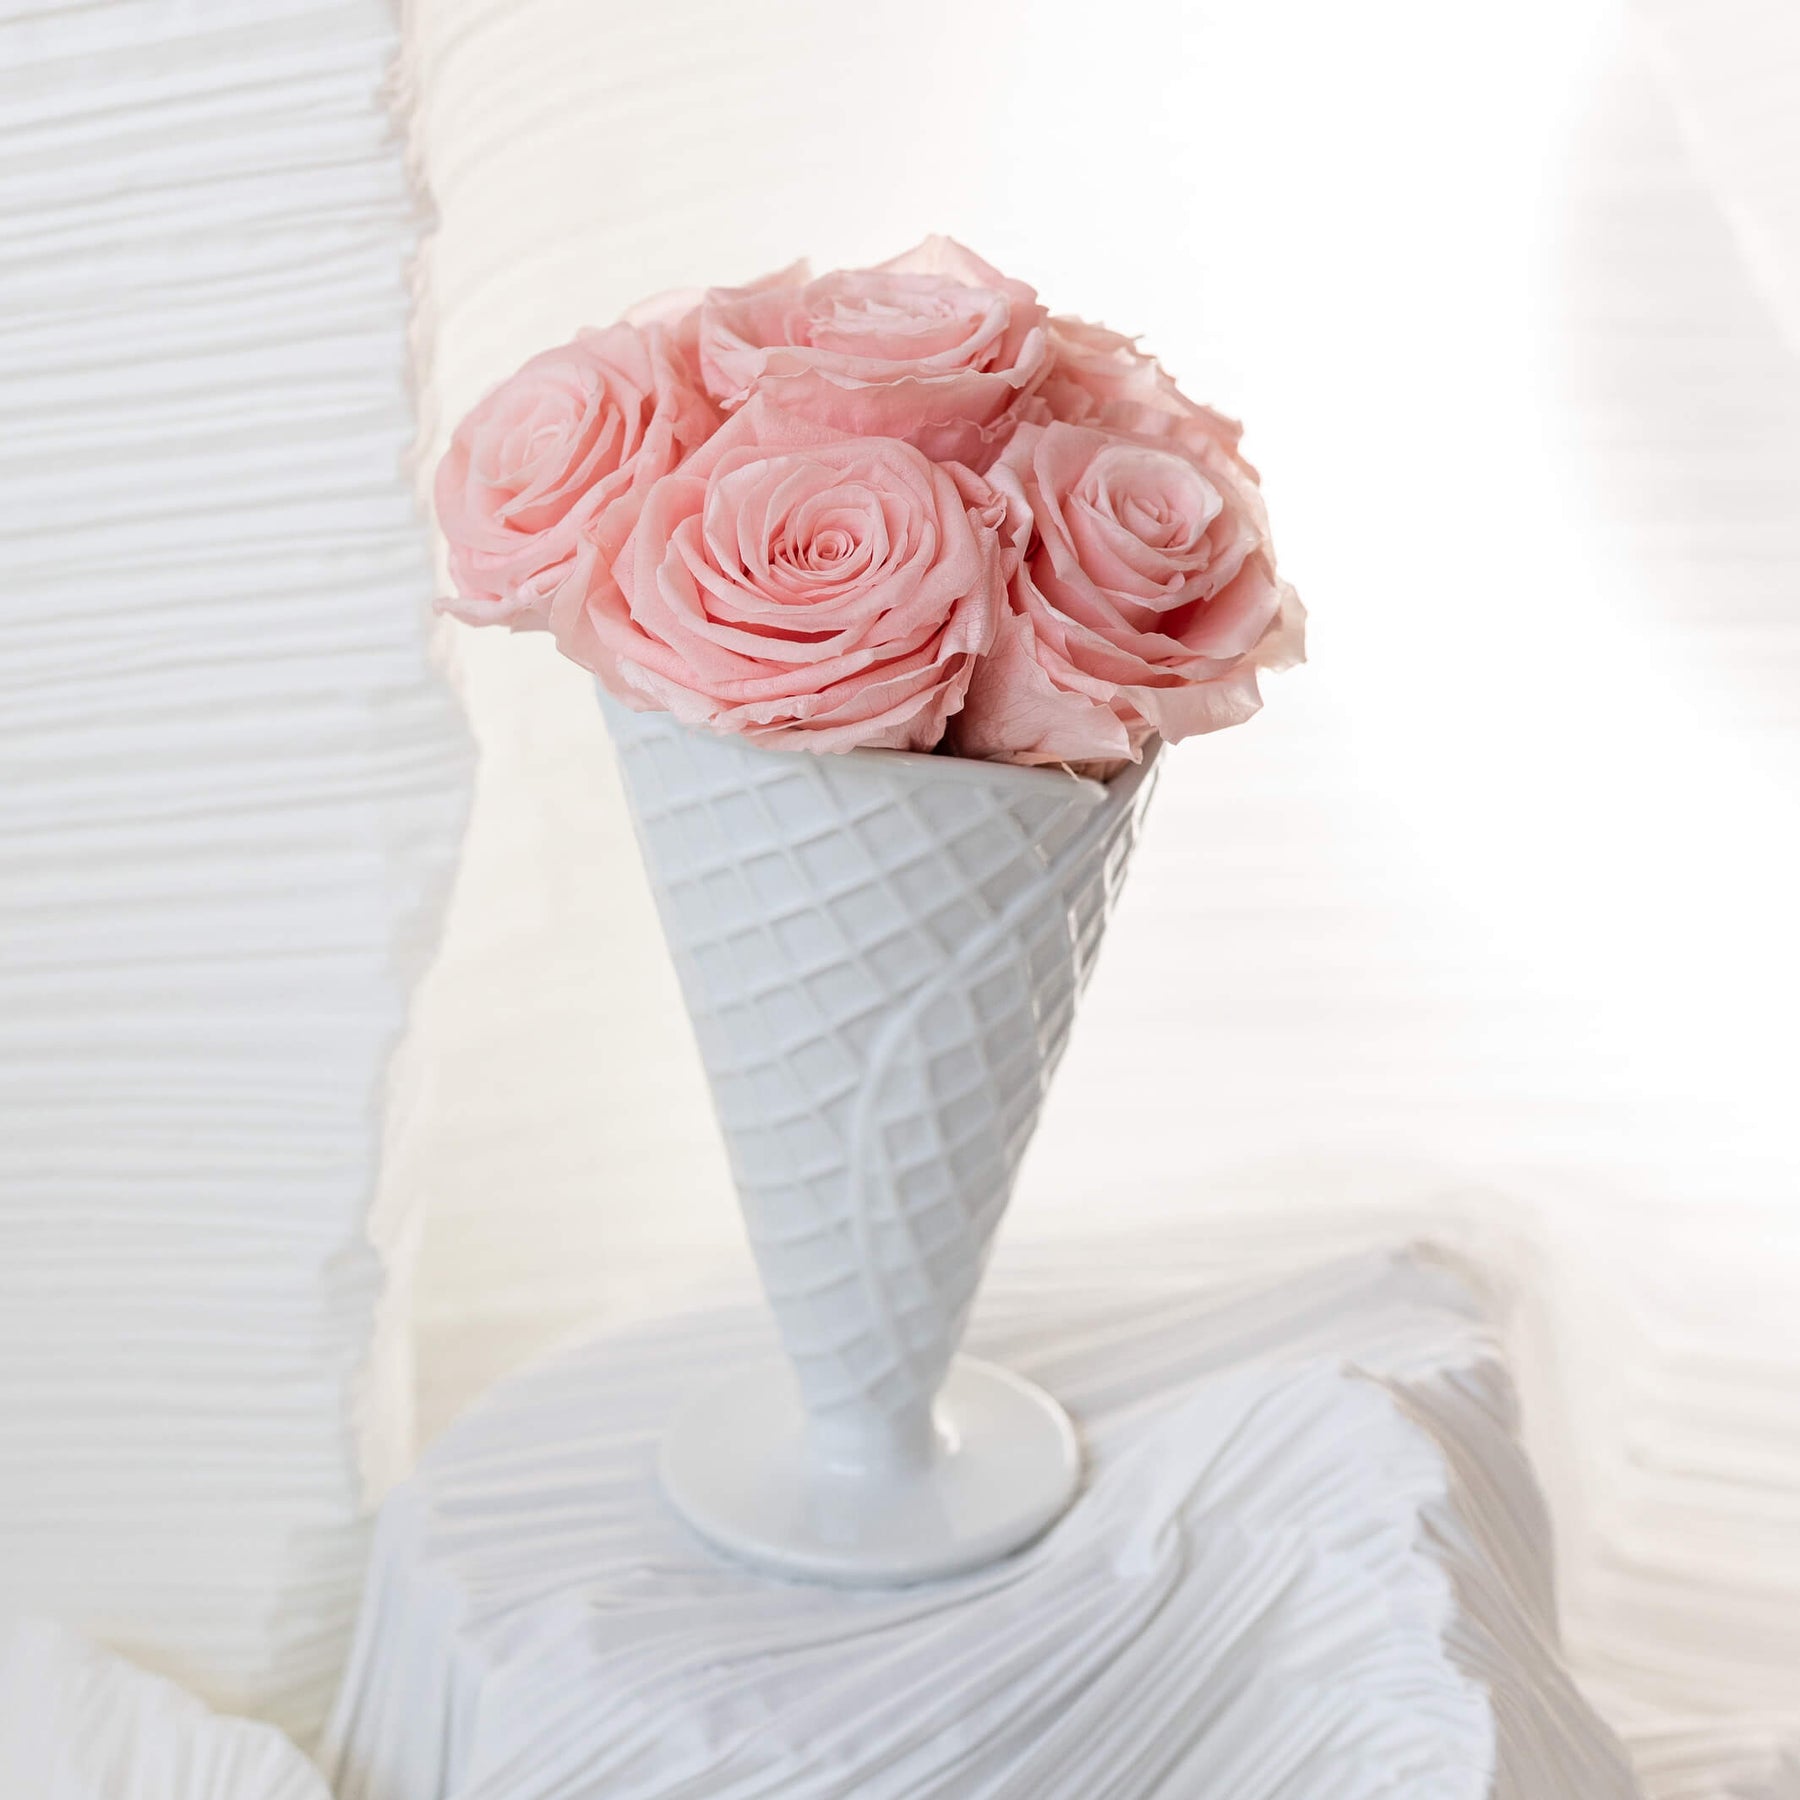 Rose Cone Styrofoam - Benedict's Home and Garden